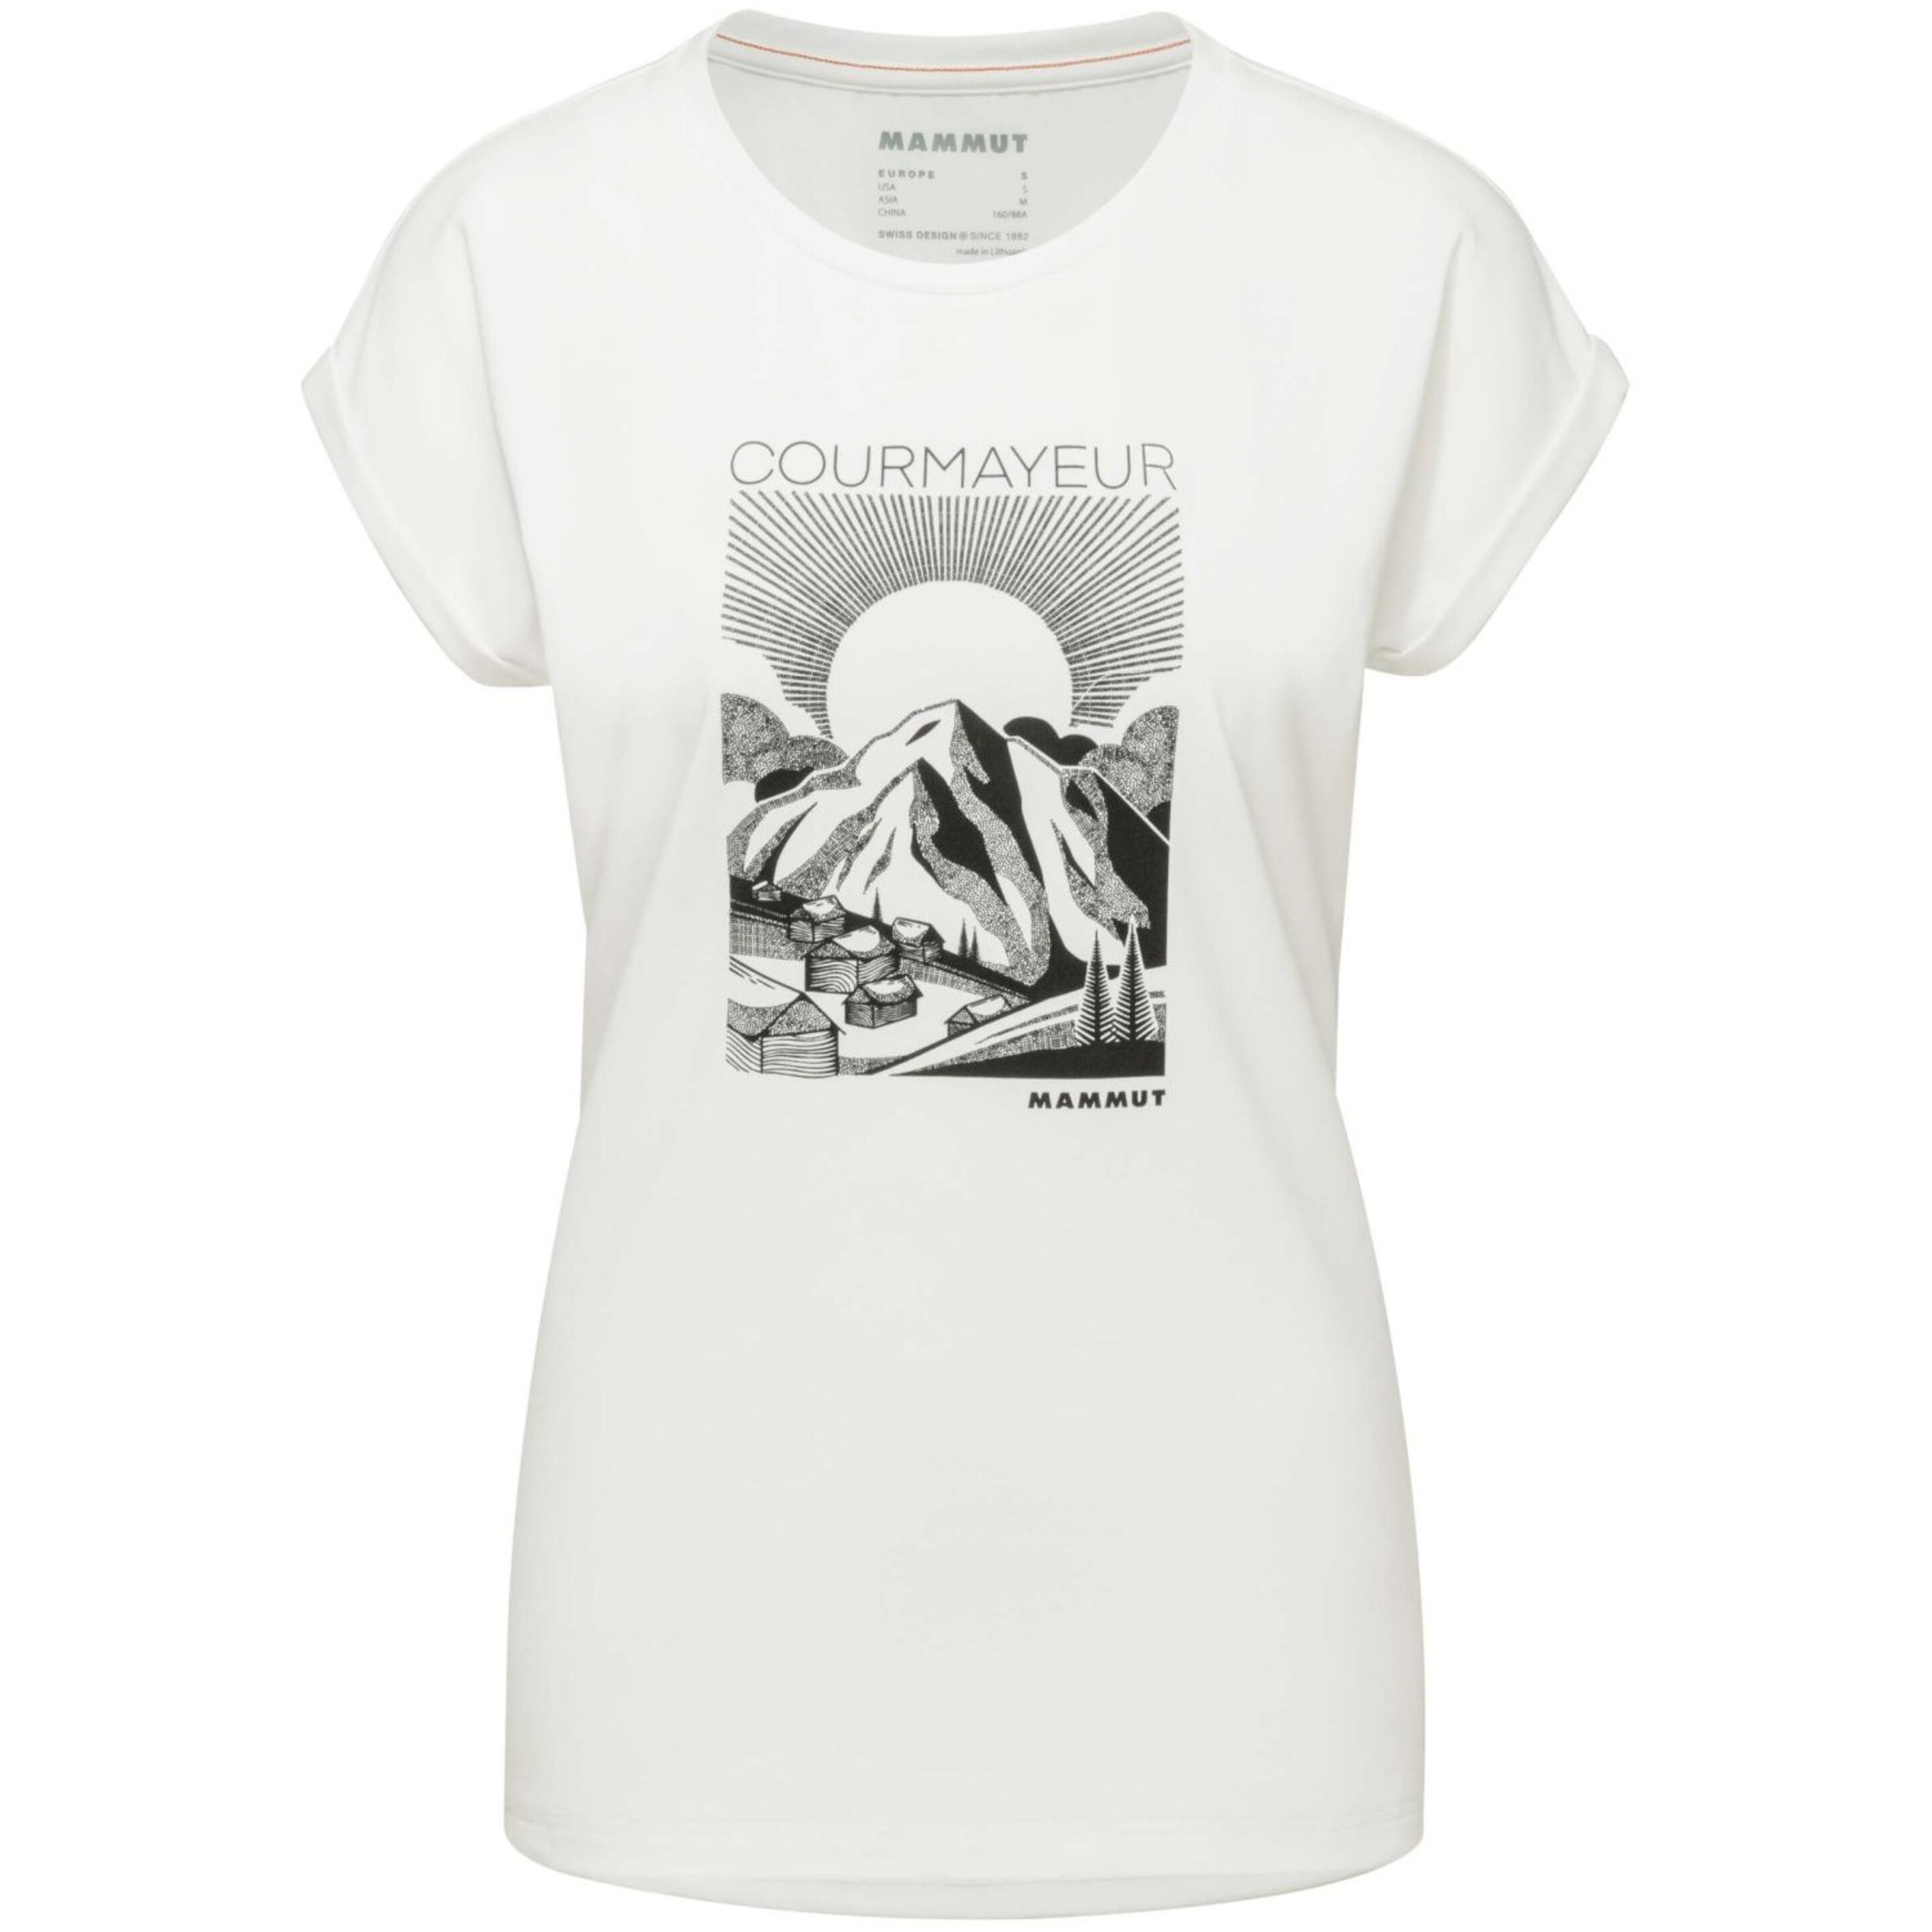 Camiseta Mammut Mountain Courmayeur